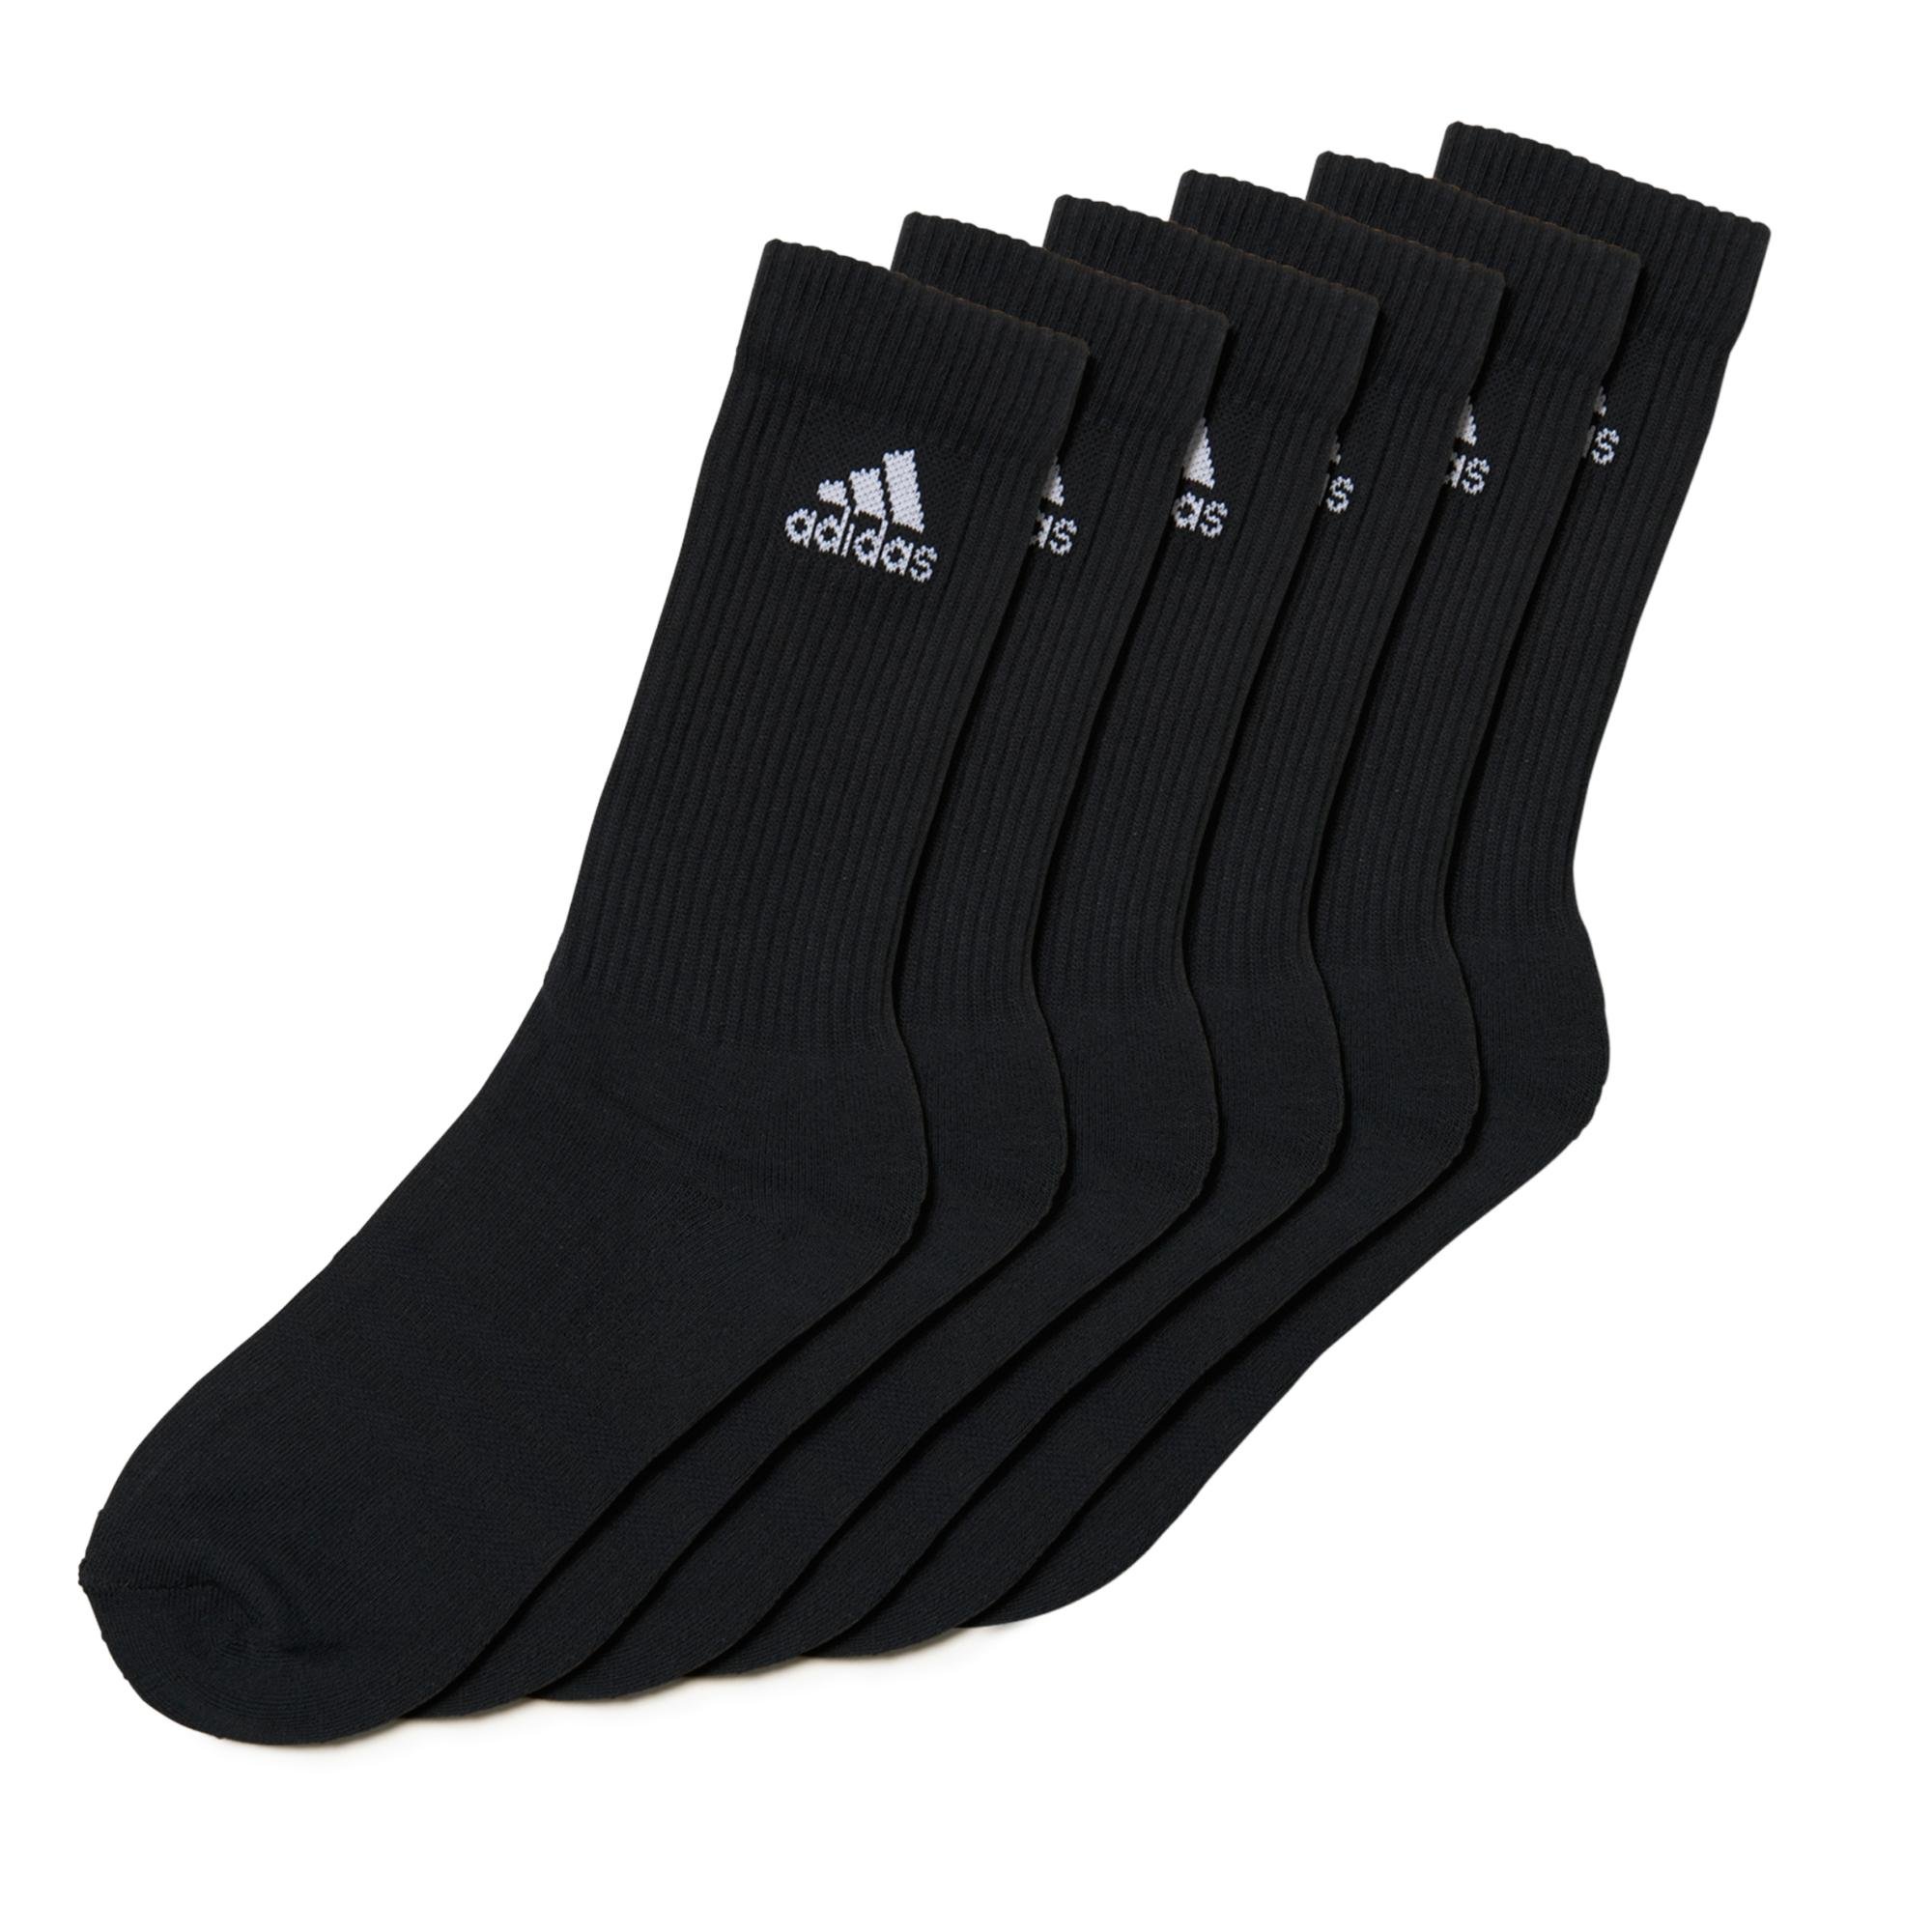 adidas CUSHIONED CREW Tennissocken Sportsocken Damen Herren Unisex 6 Paar, Farbe:Black, Socken & Strümpfe:43-45